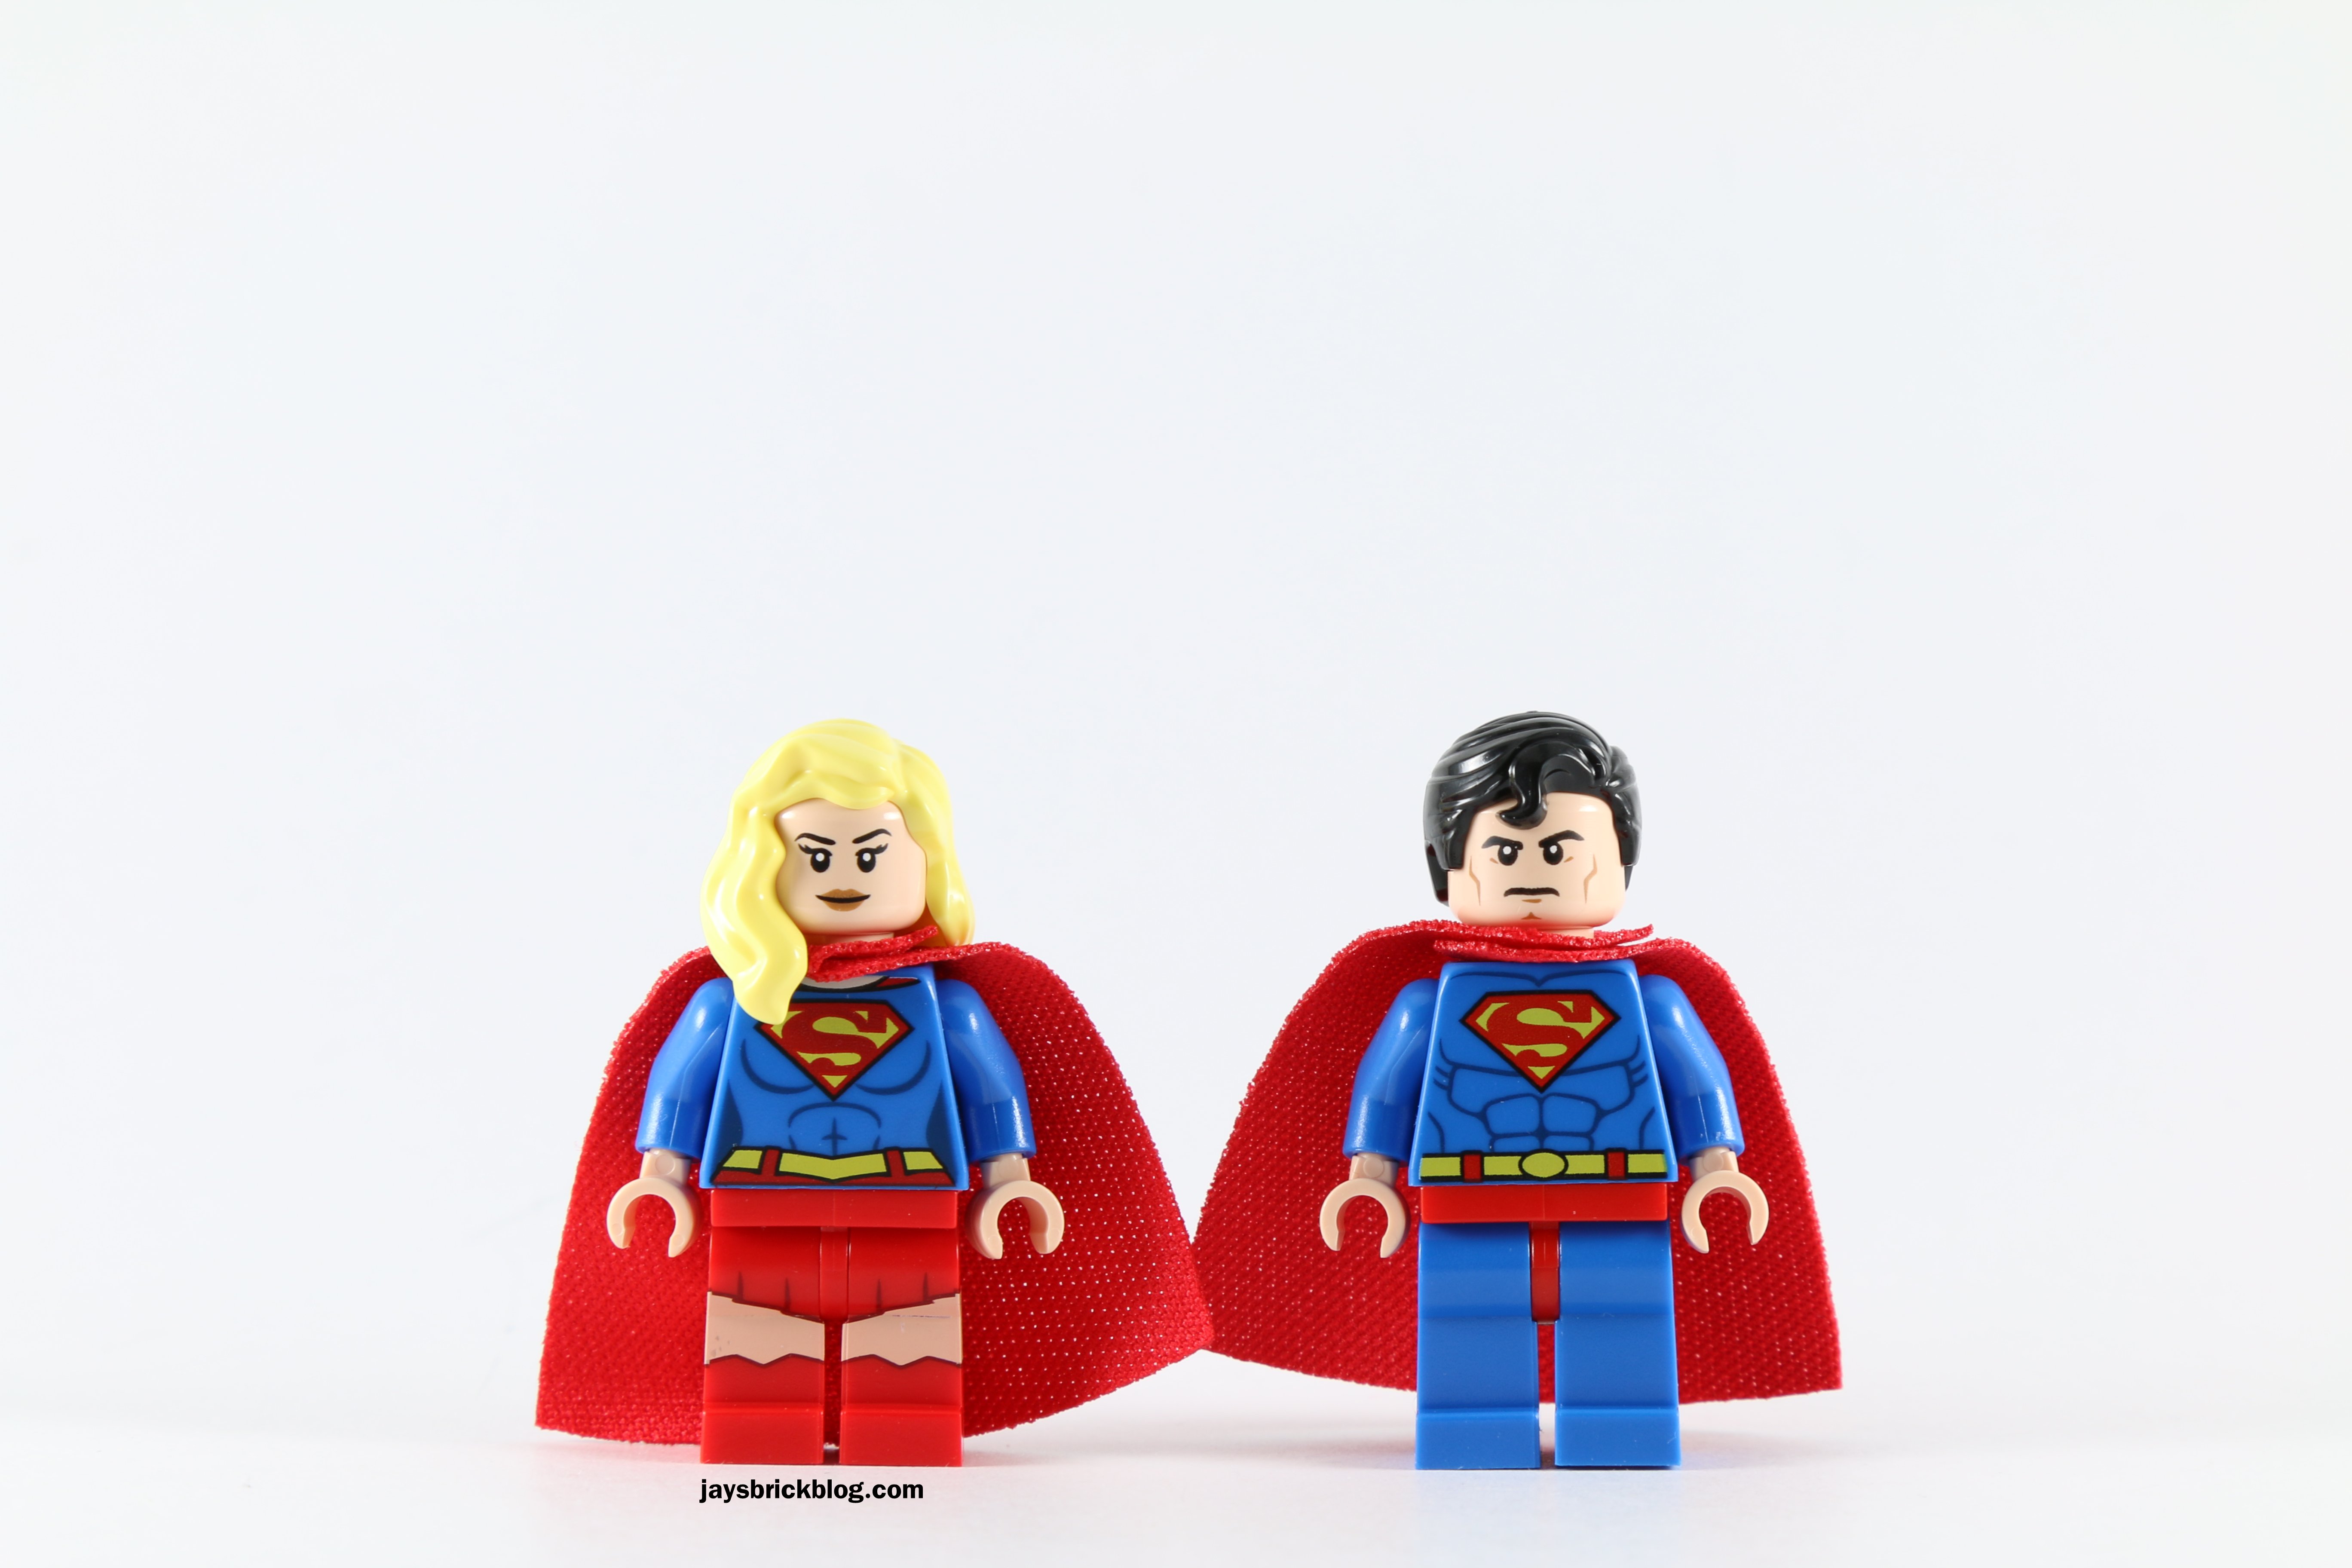 Lego Supergirl 76040 Super Heroes Justice League Minifigure 